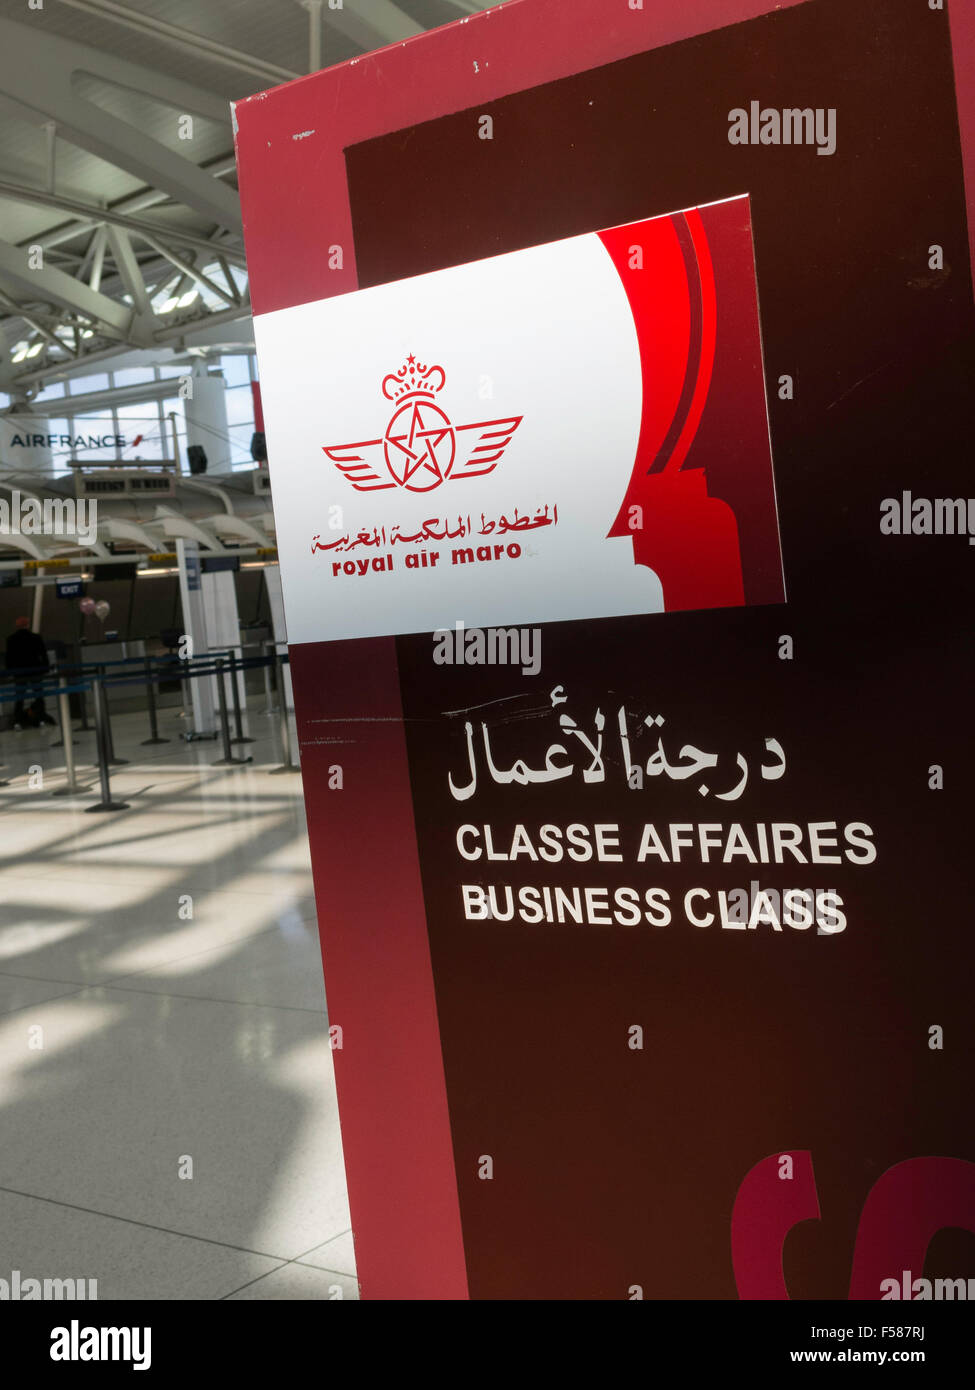 Business Class Check-In Sign, Maroc Airline, International Terminal,John F. Kennedy International New York Stock Photo - Alamy